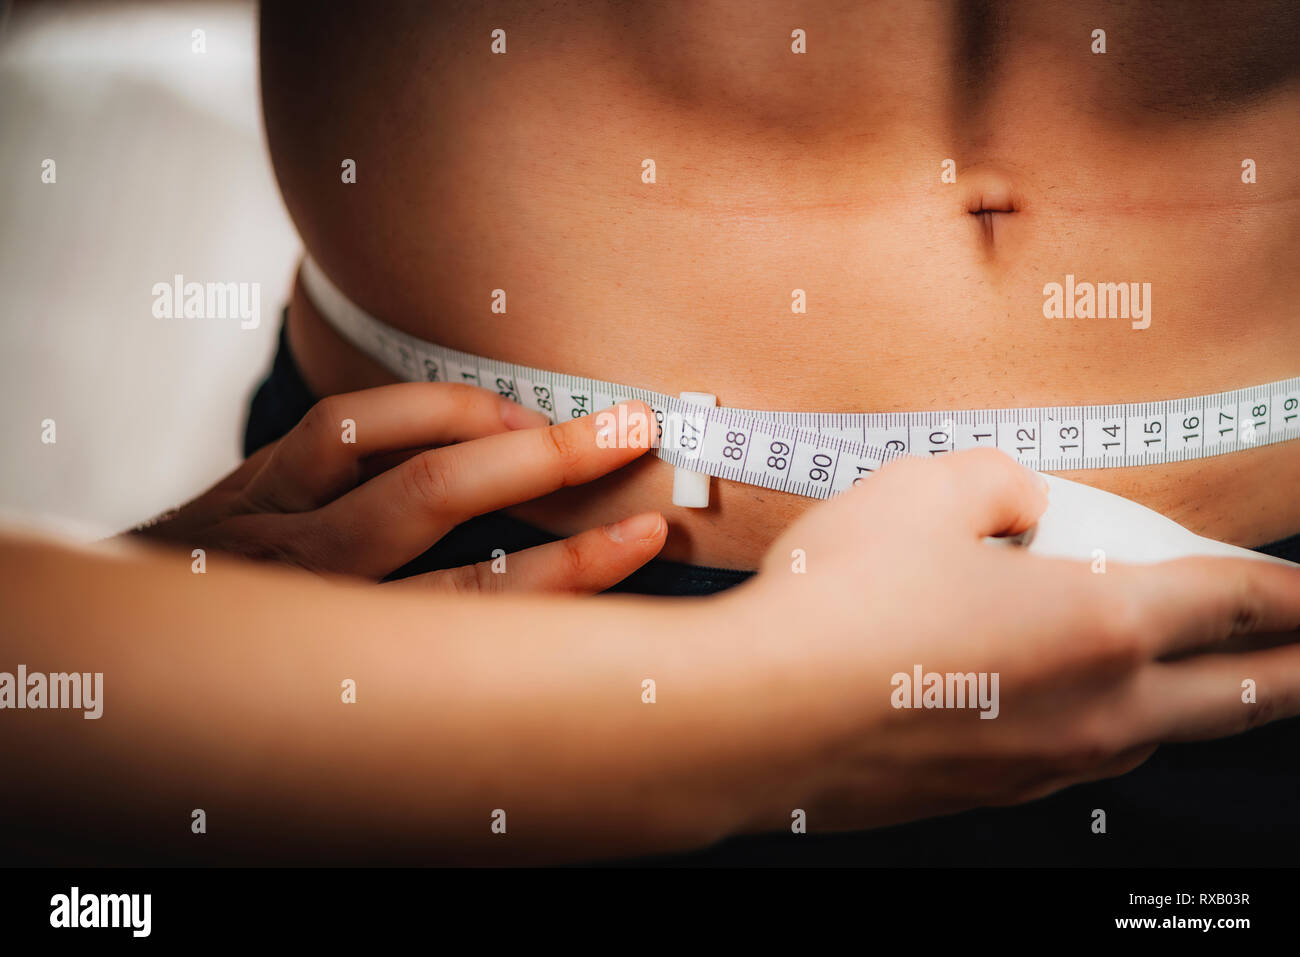 Measuring waist circumference Stock Photo